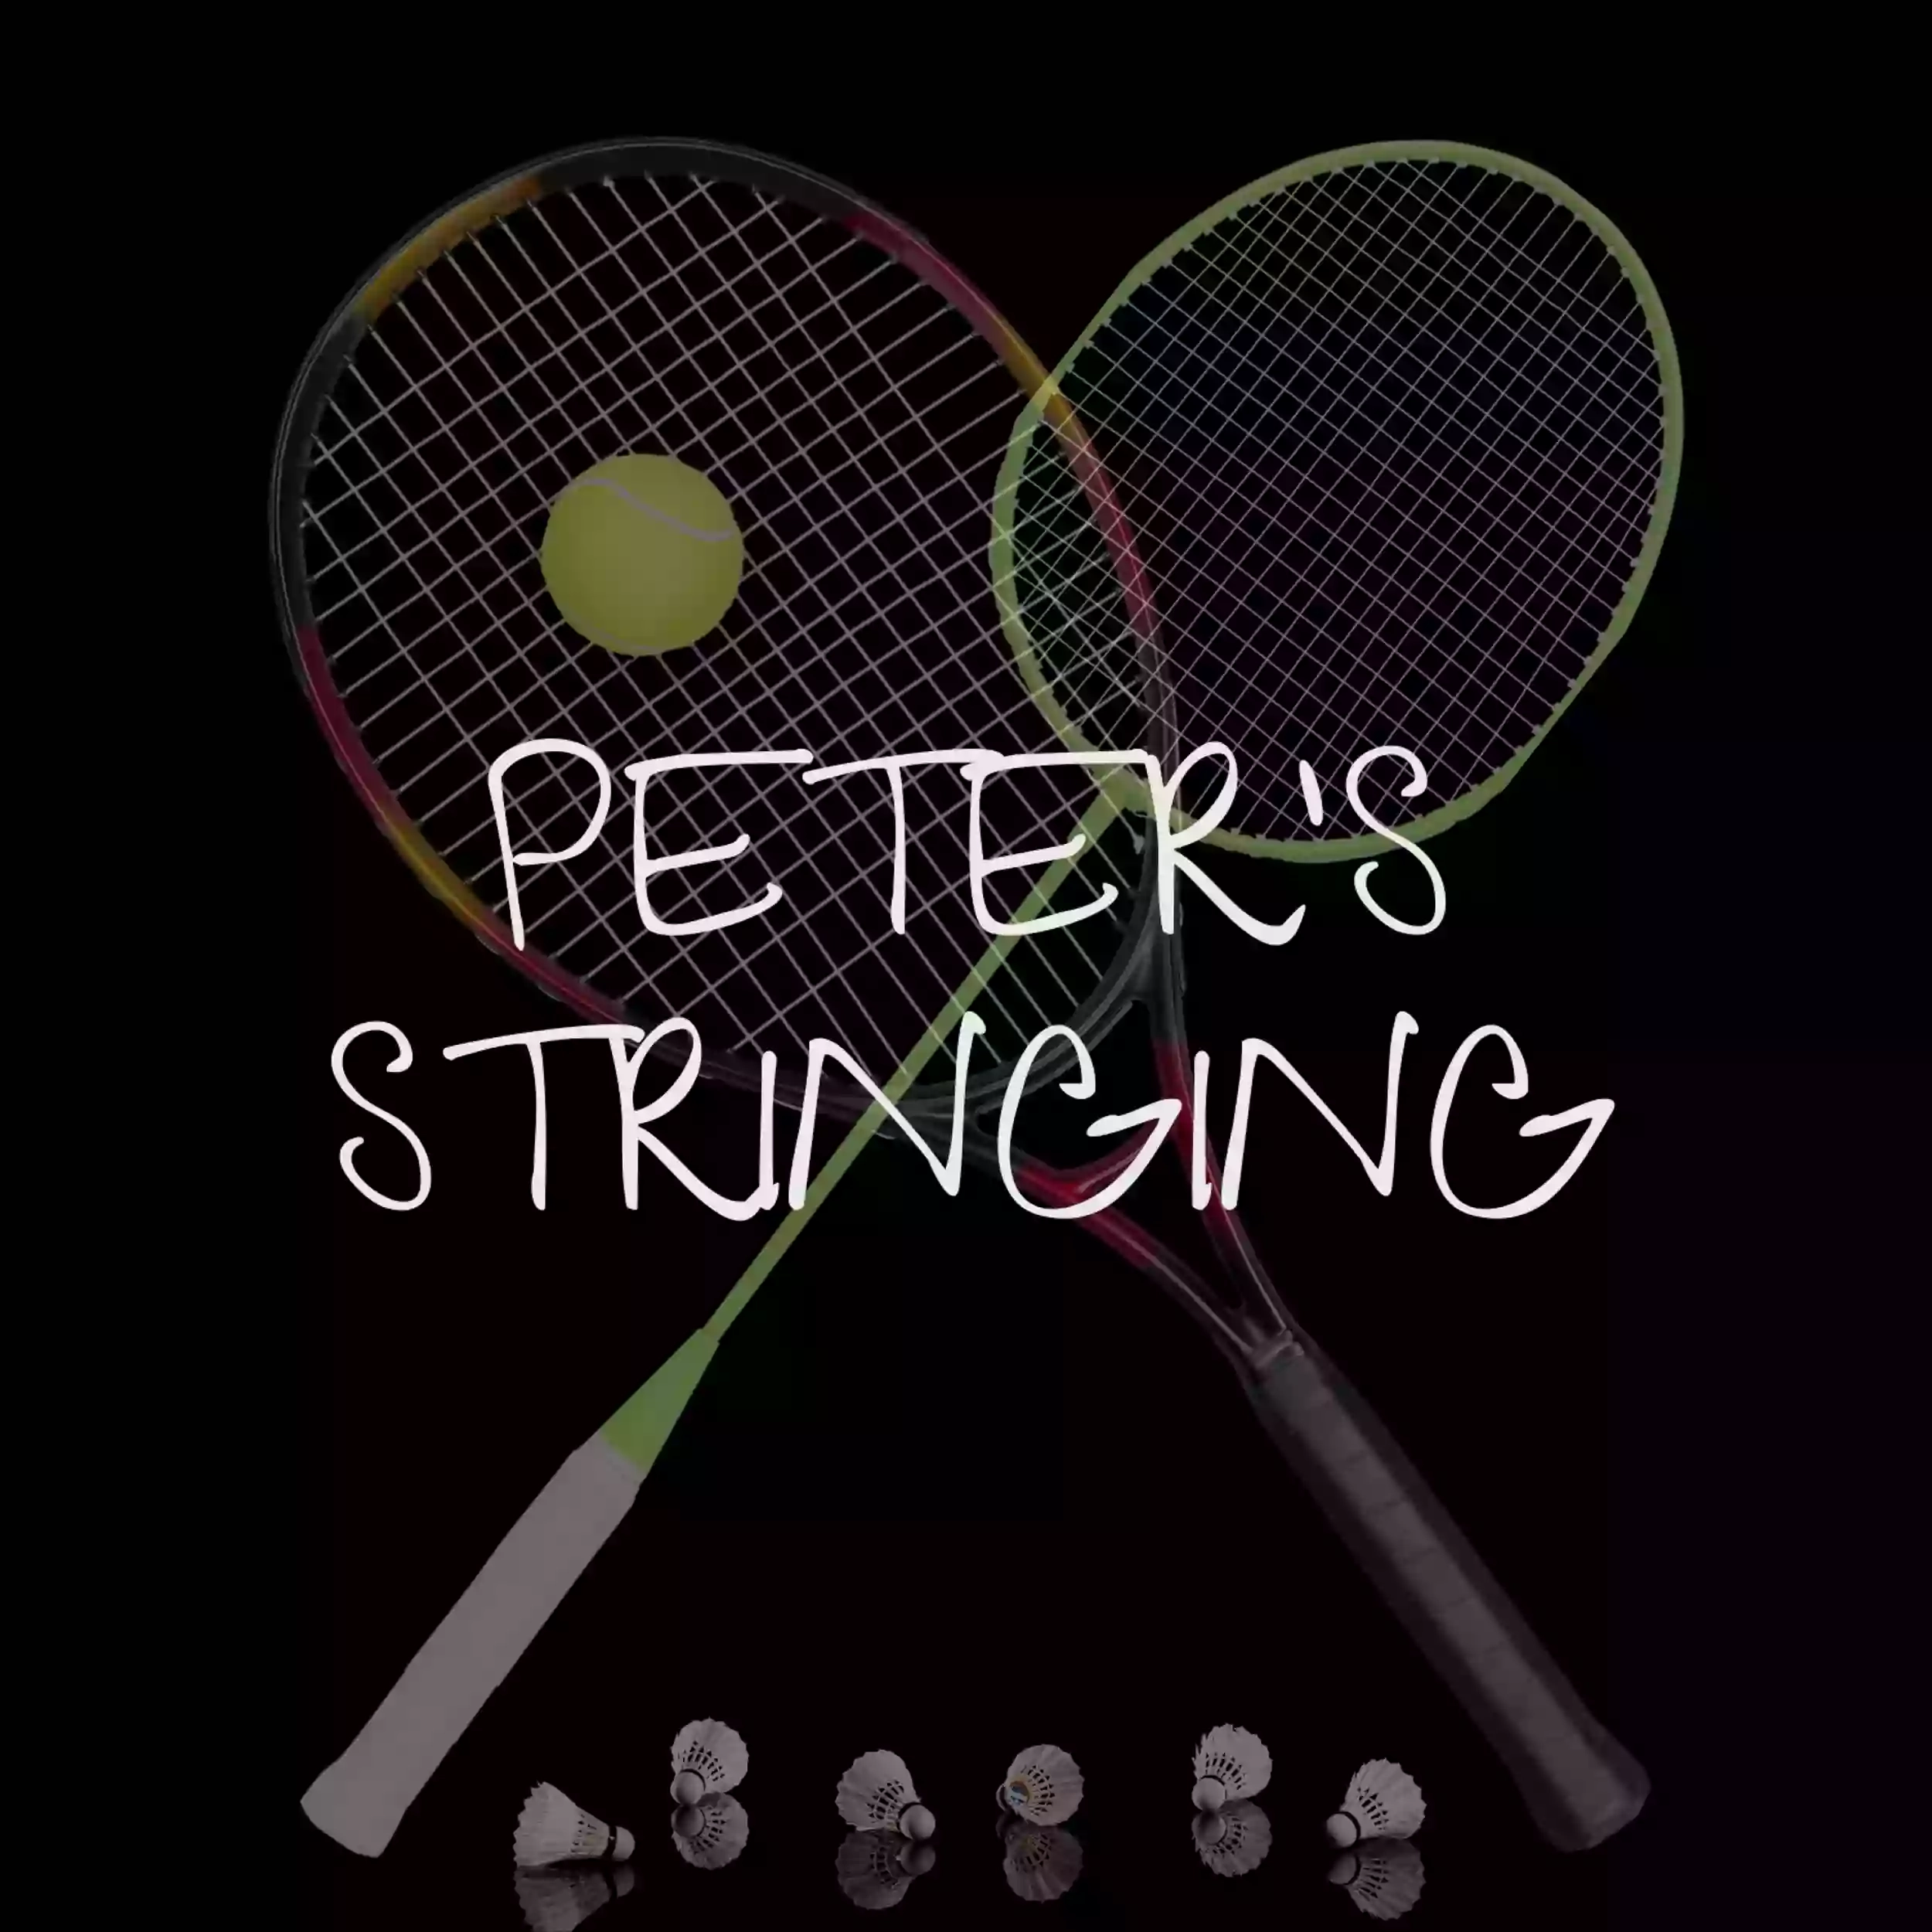 Peter's Stringing